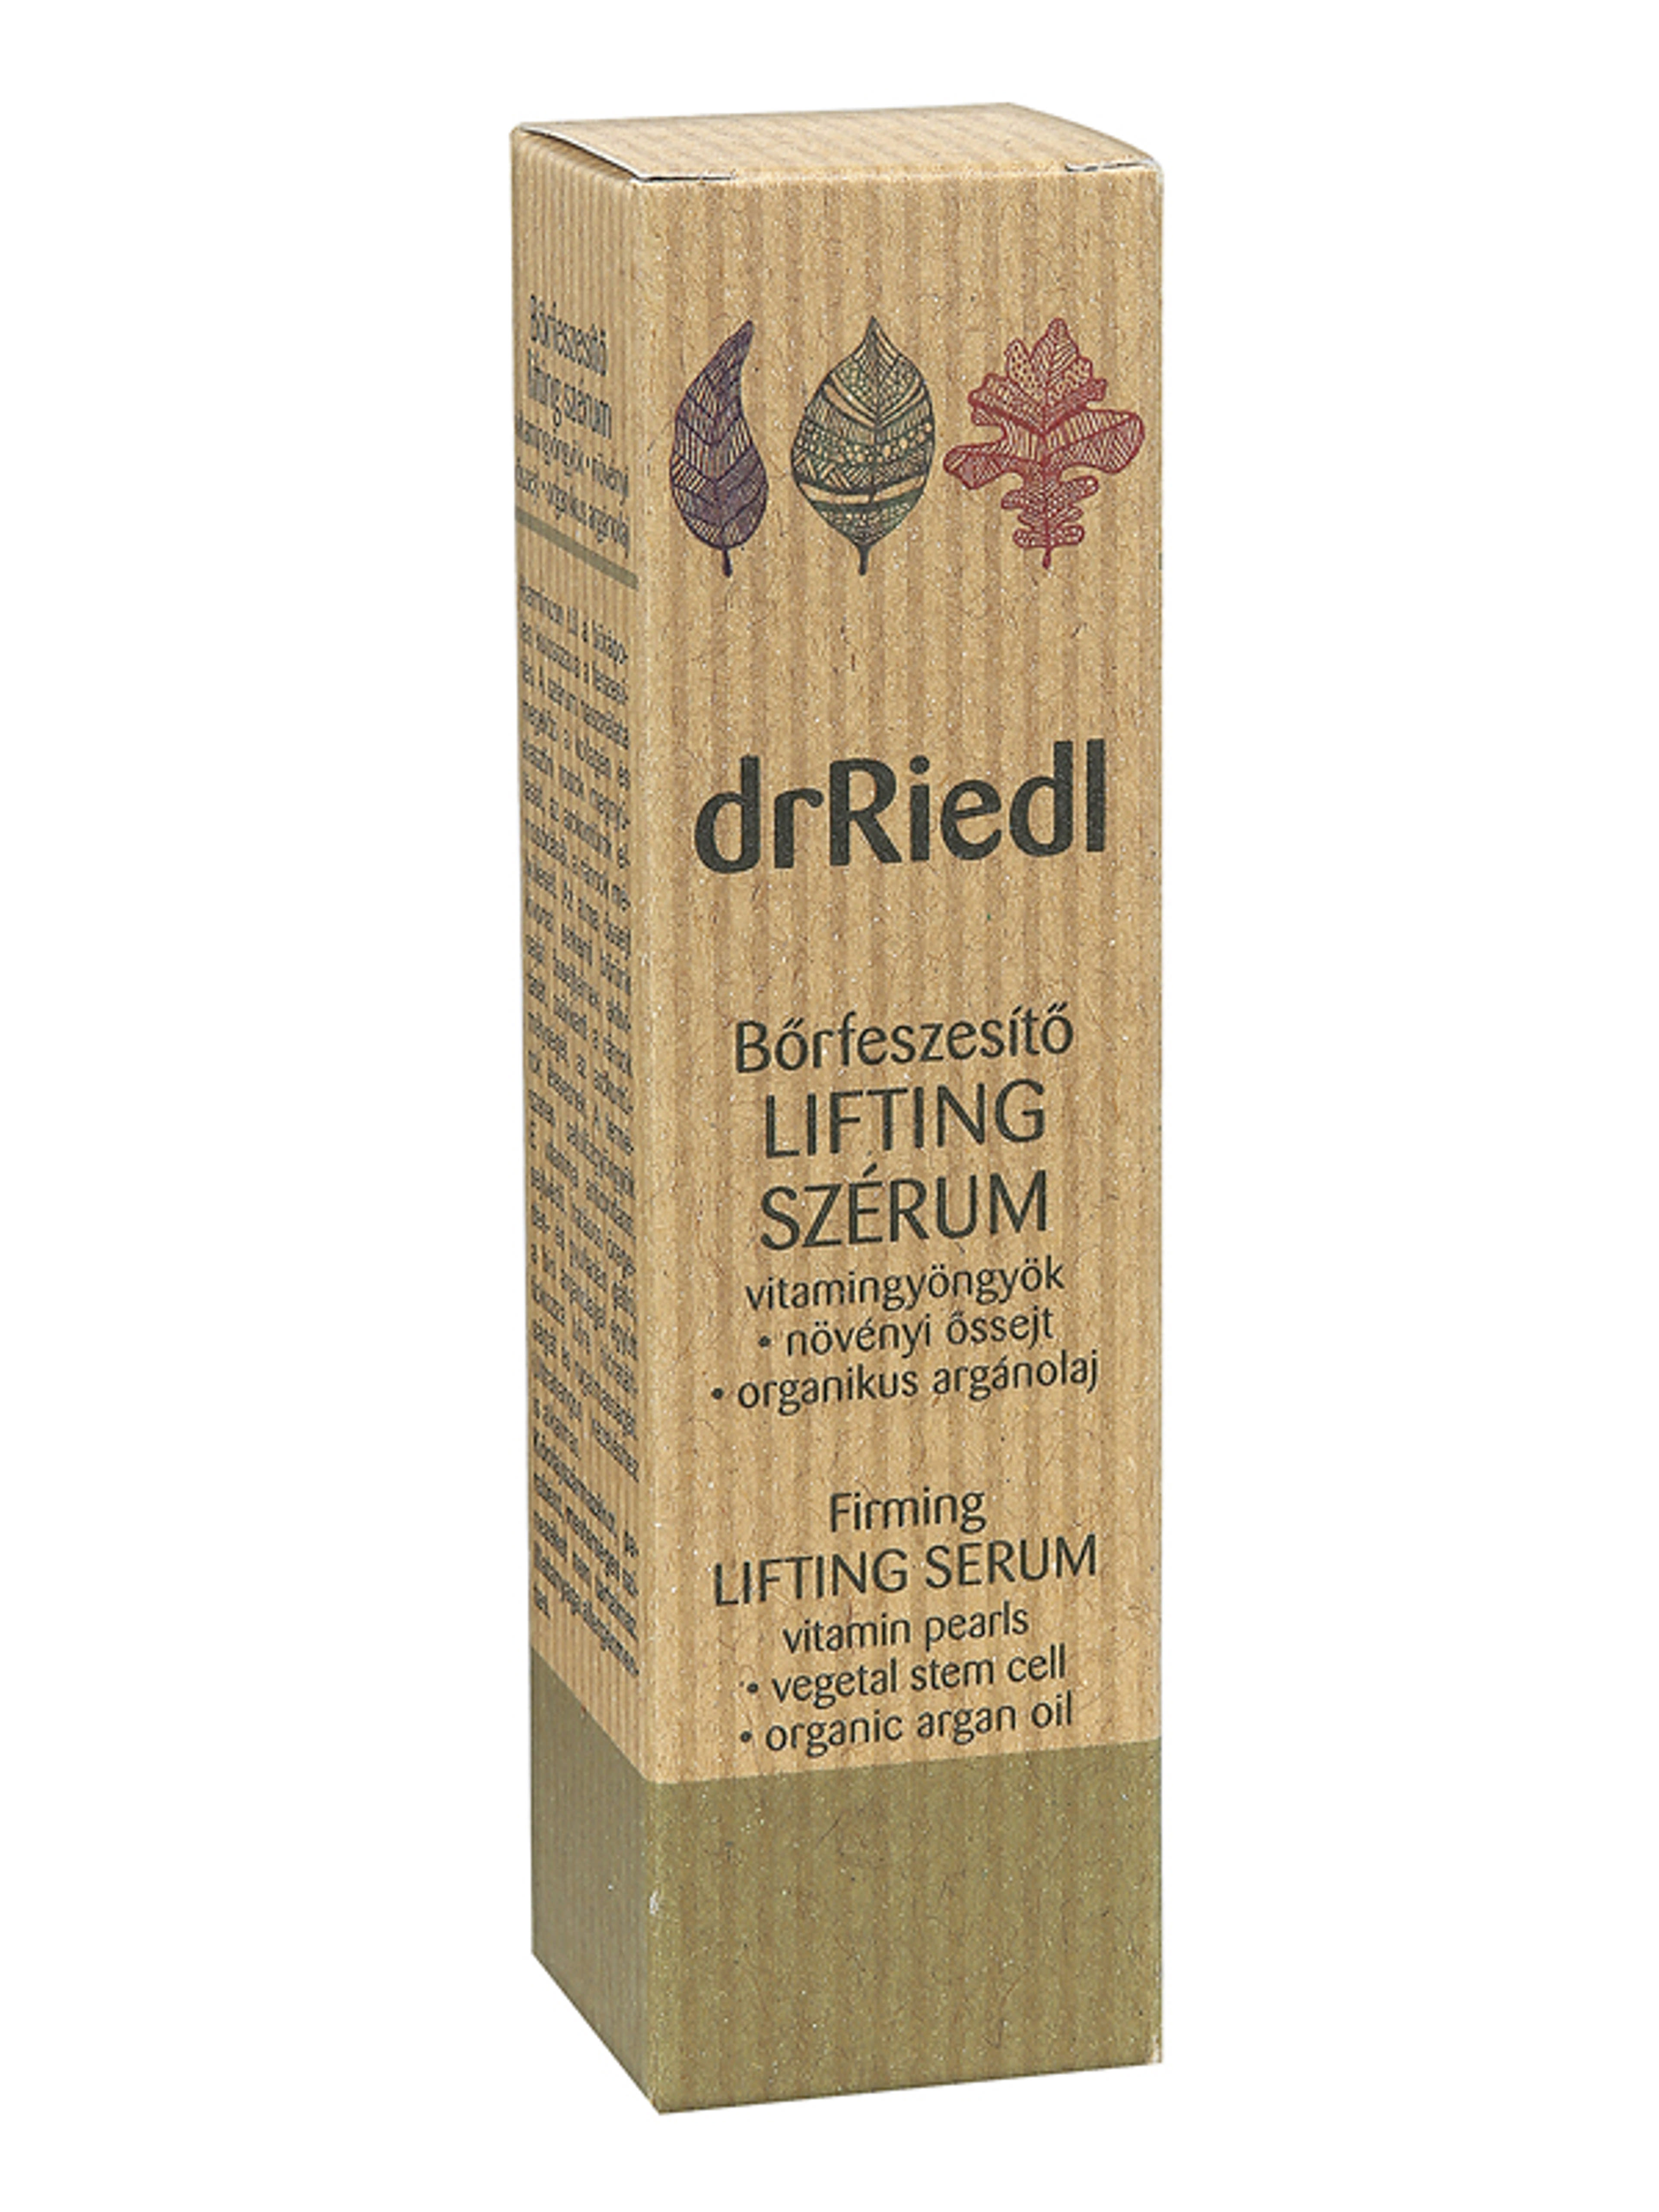 drRiedl Lifting bőrfeszesítő szérum - 30 ml